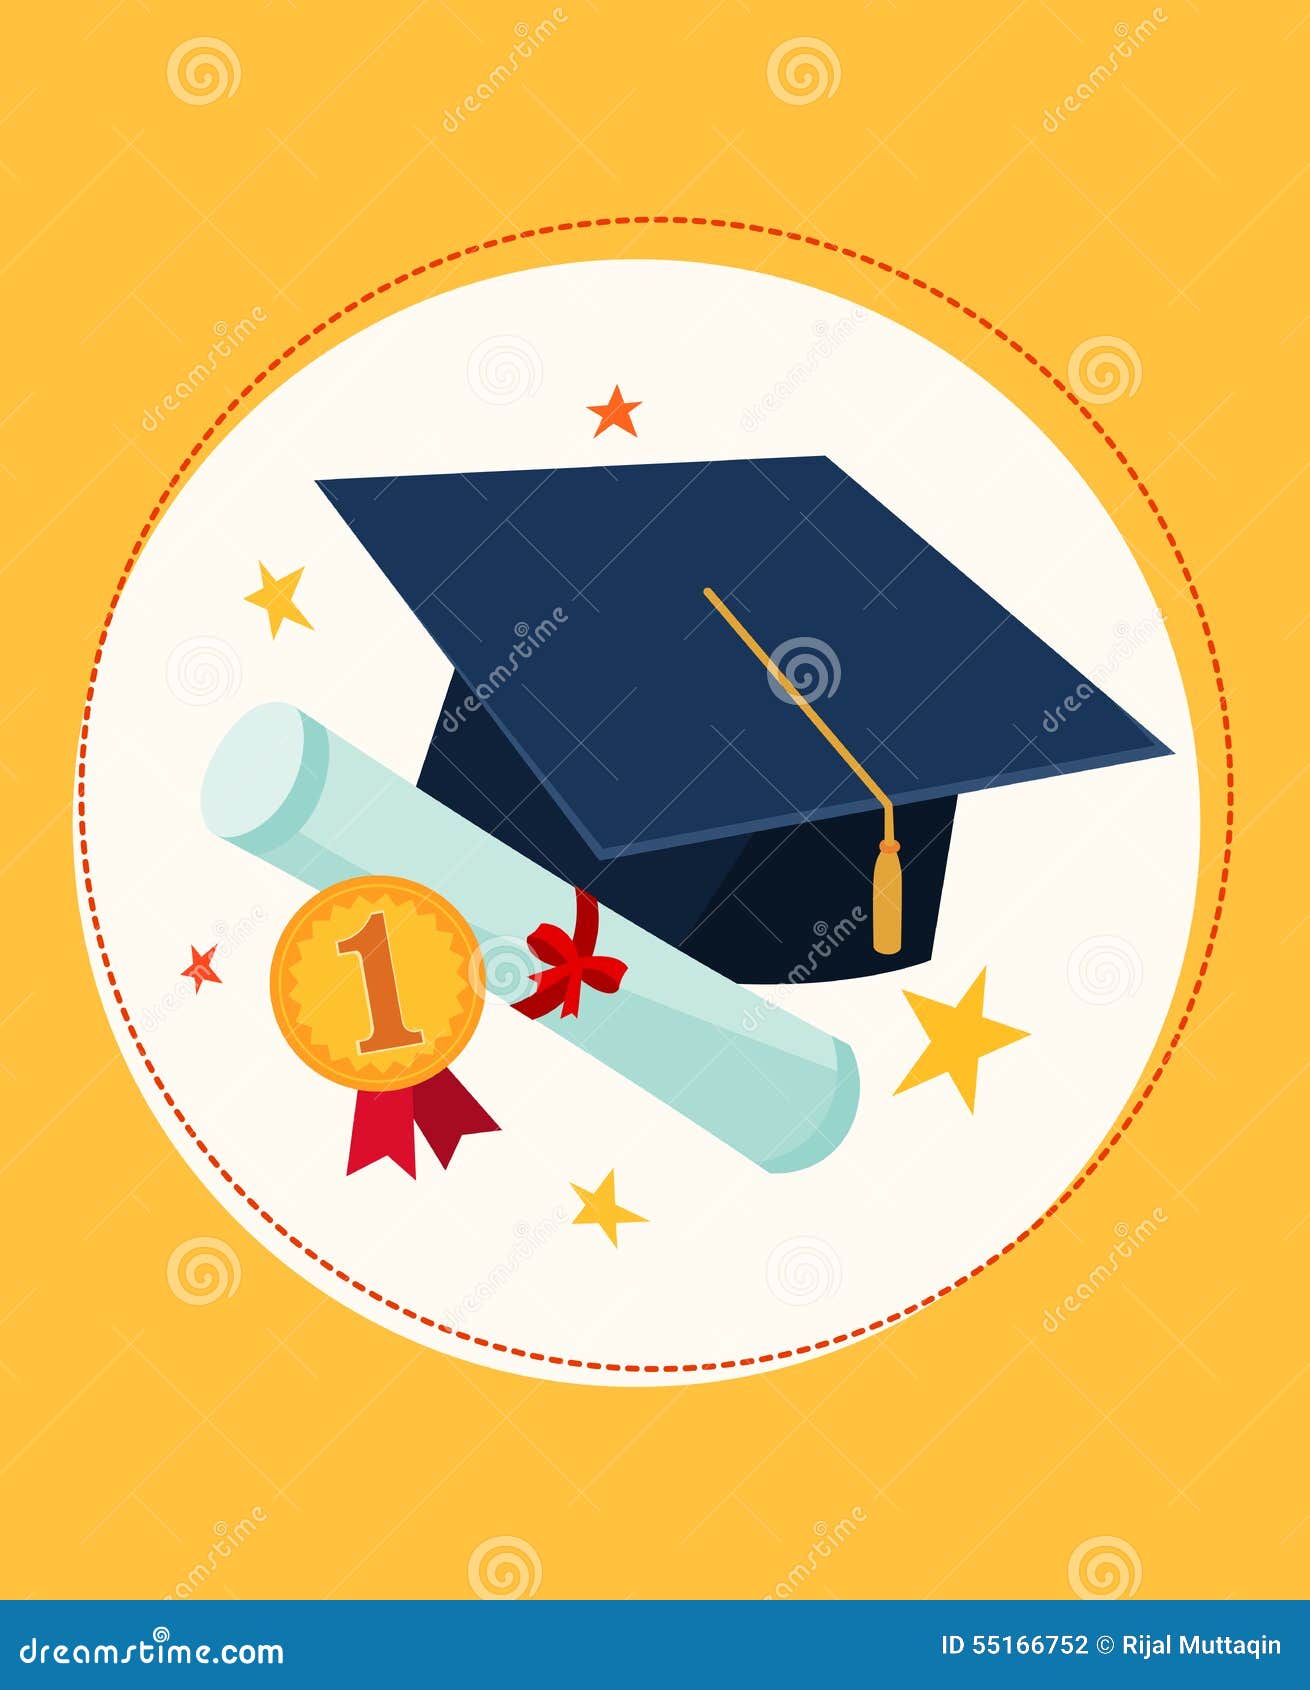 Graduation cap and award stock vector. Illustration of graduate - 55166752